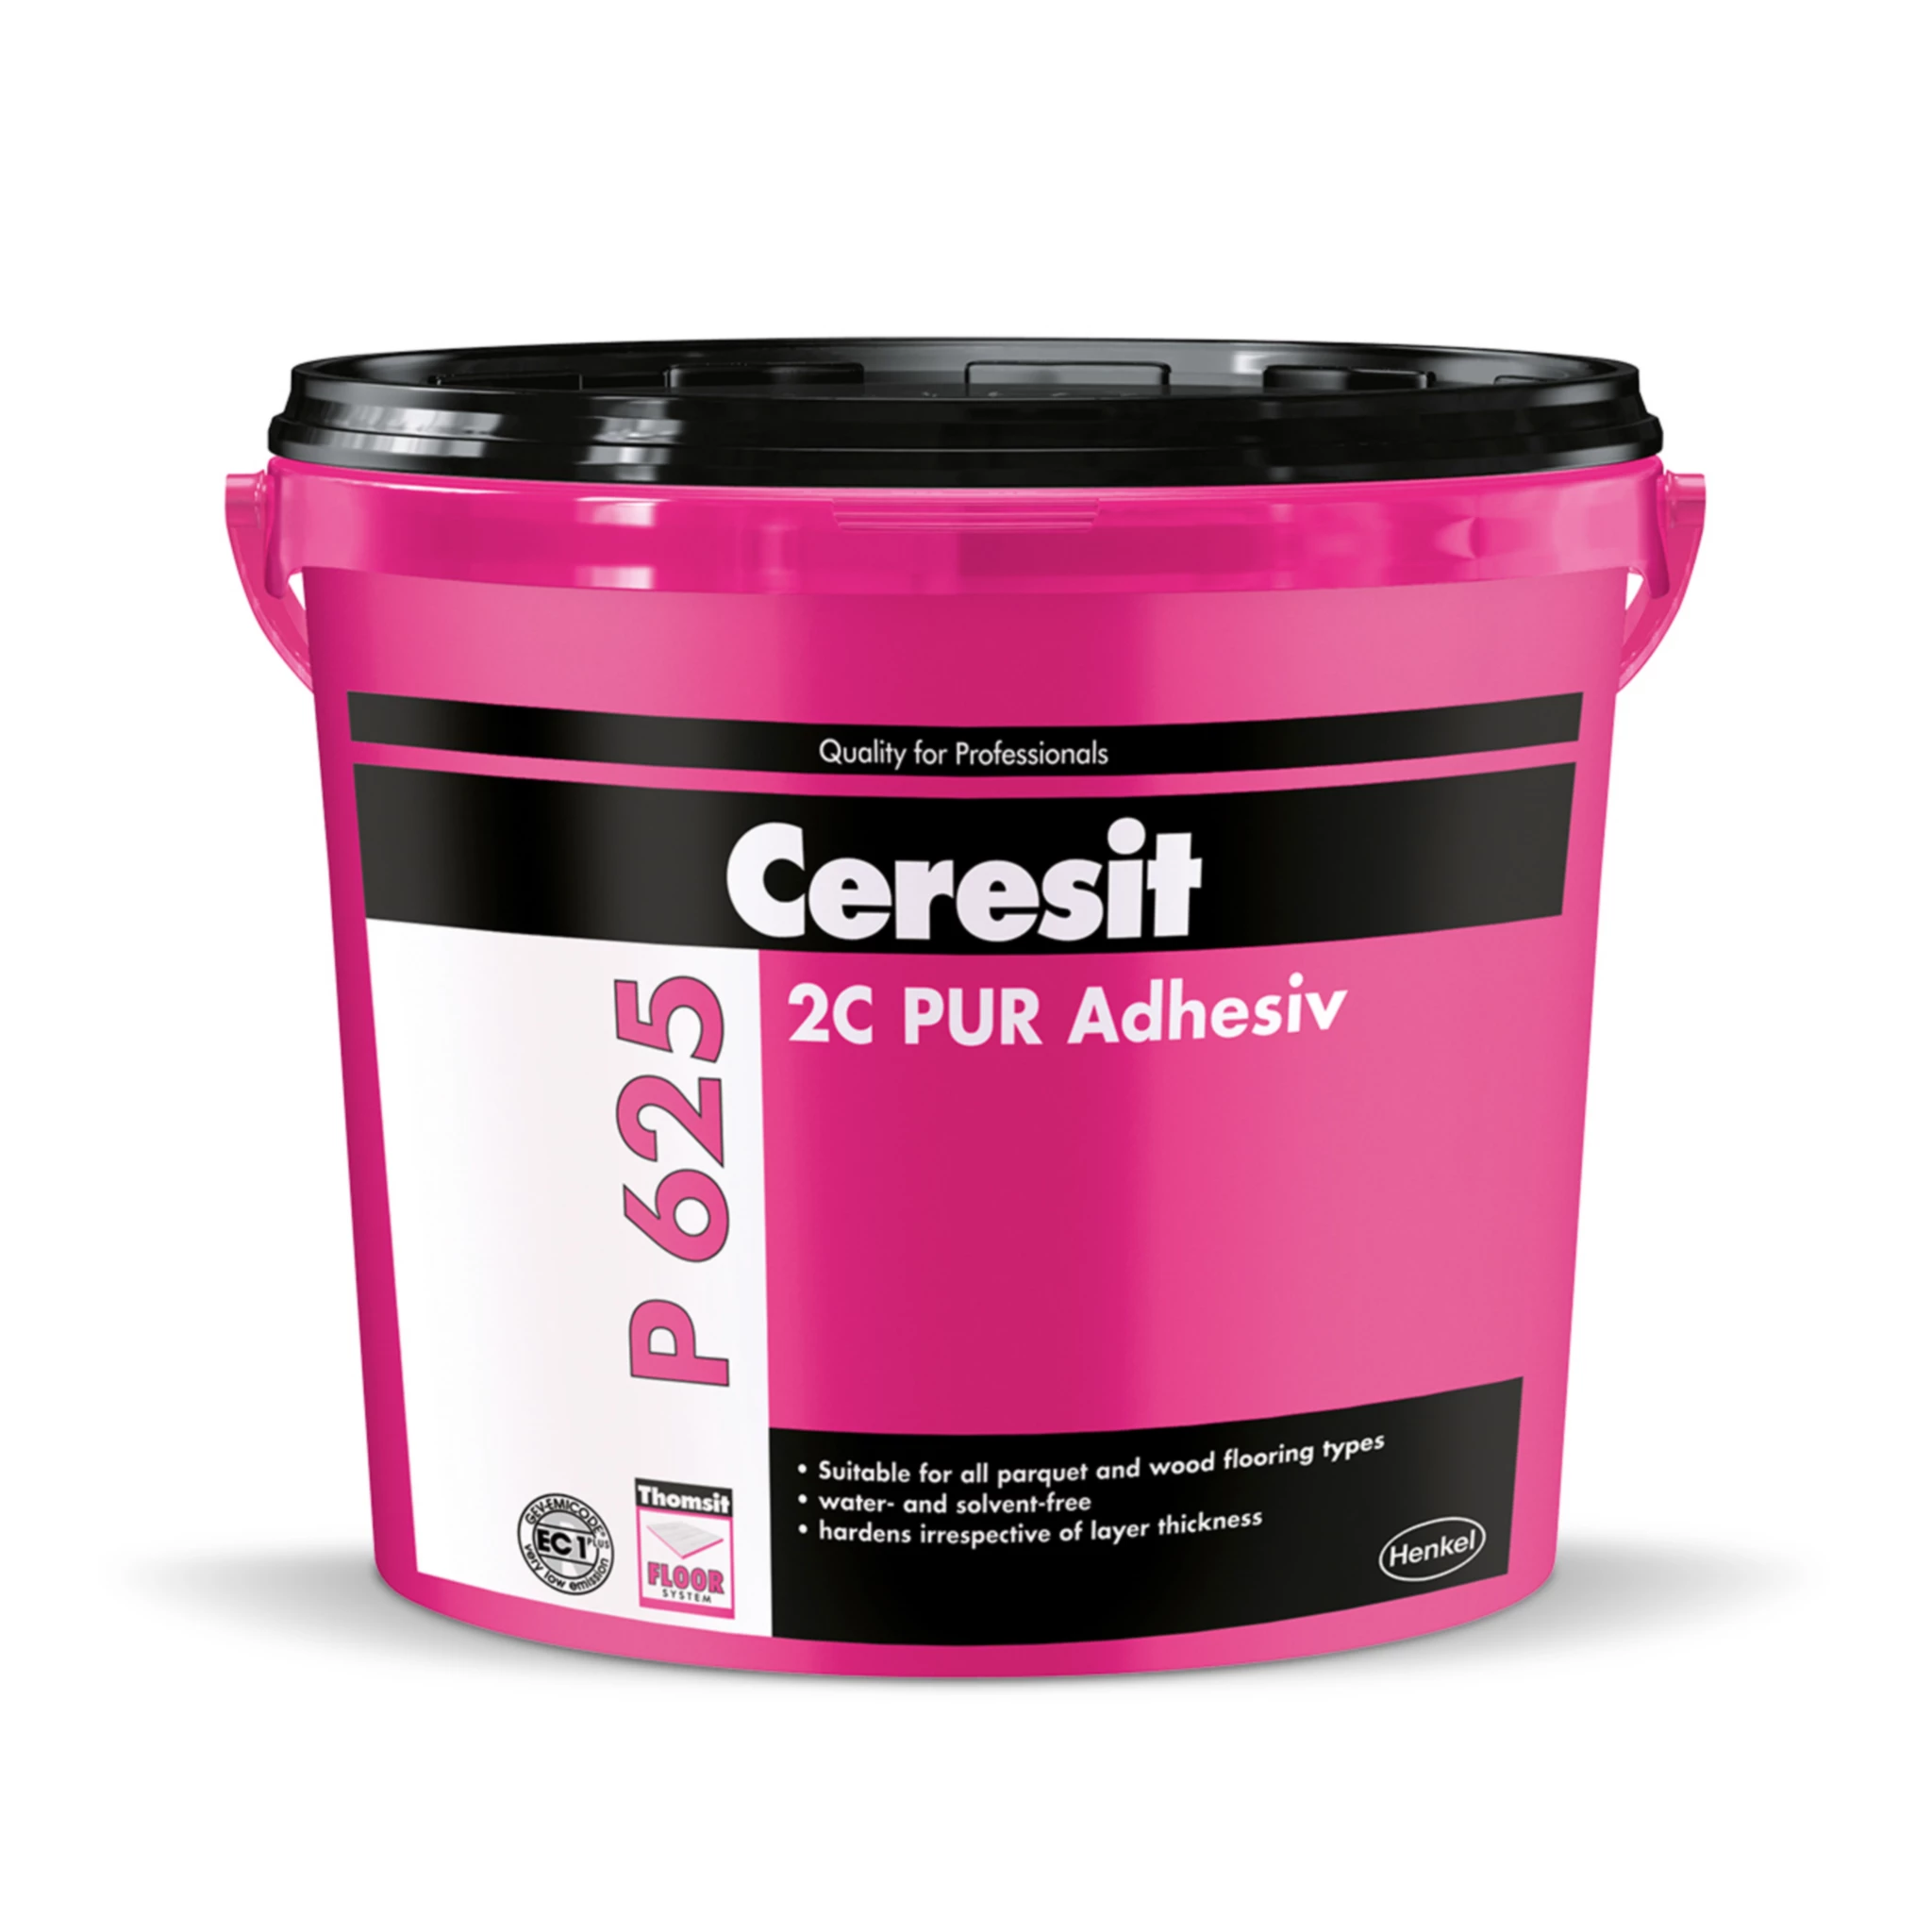 Ceresit P625 2C Rigid, water- and solvent-free, 2-component wood flooring adhesive 12kg